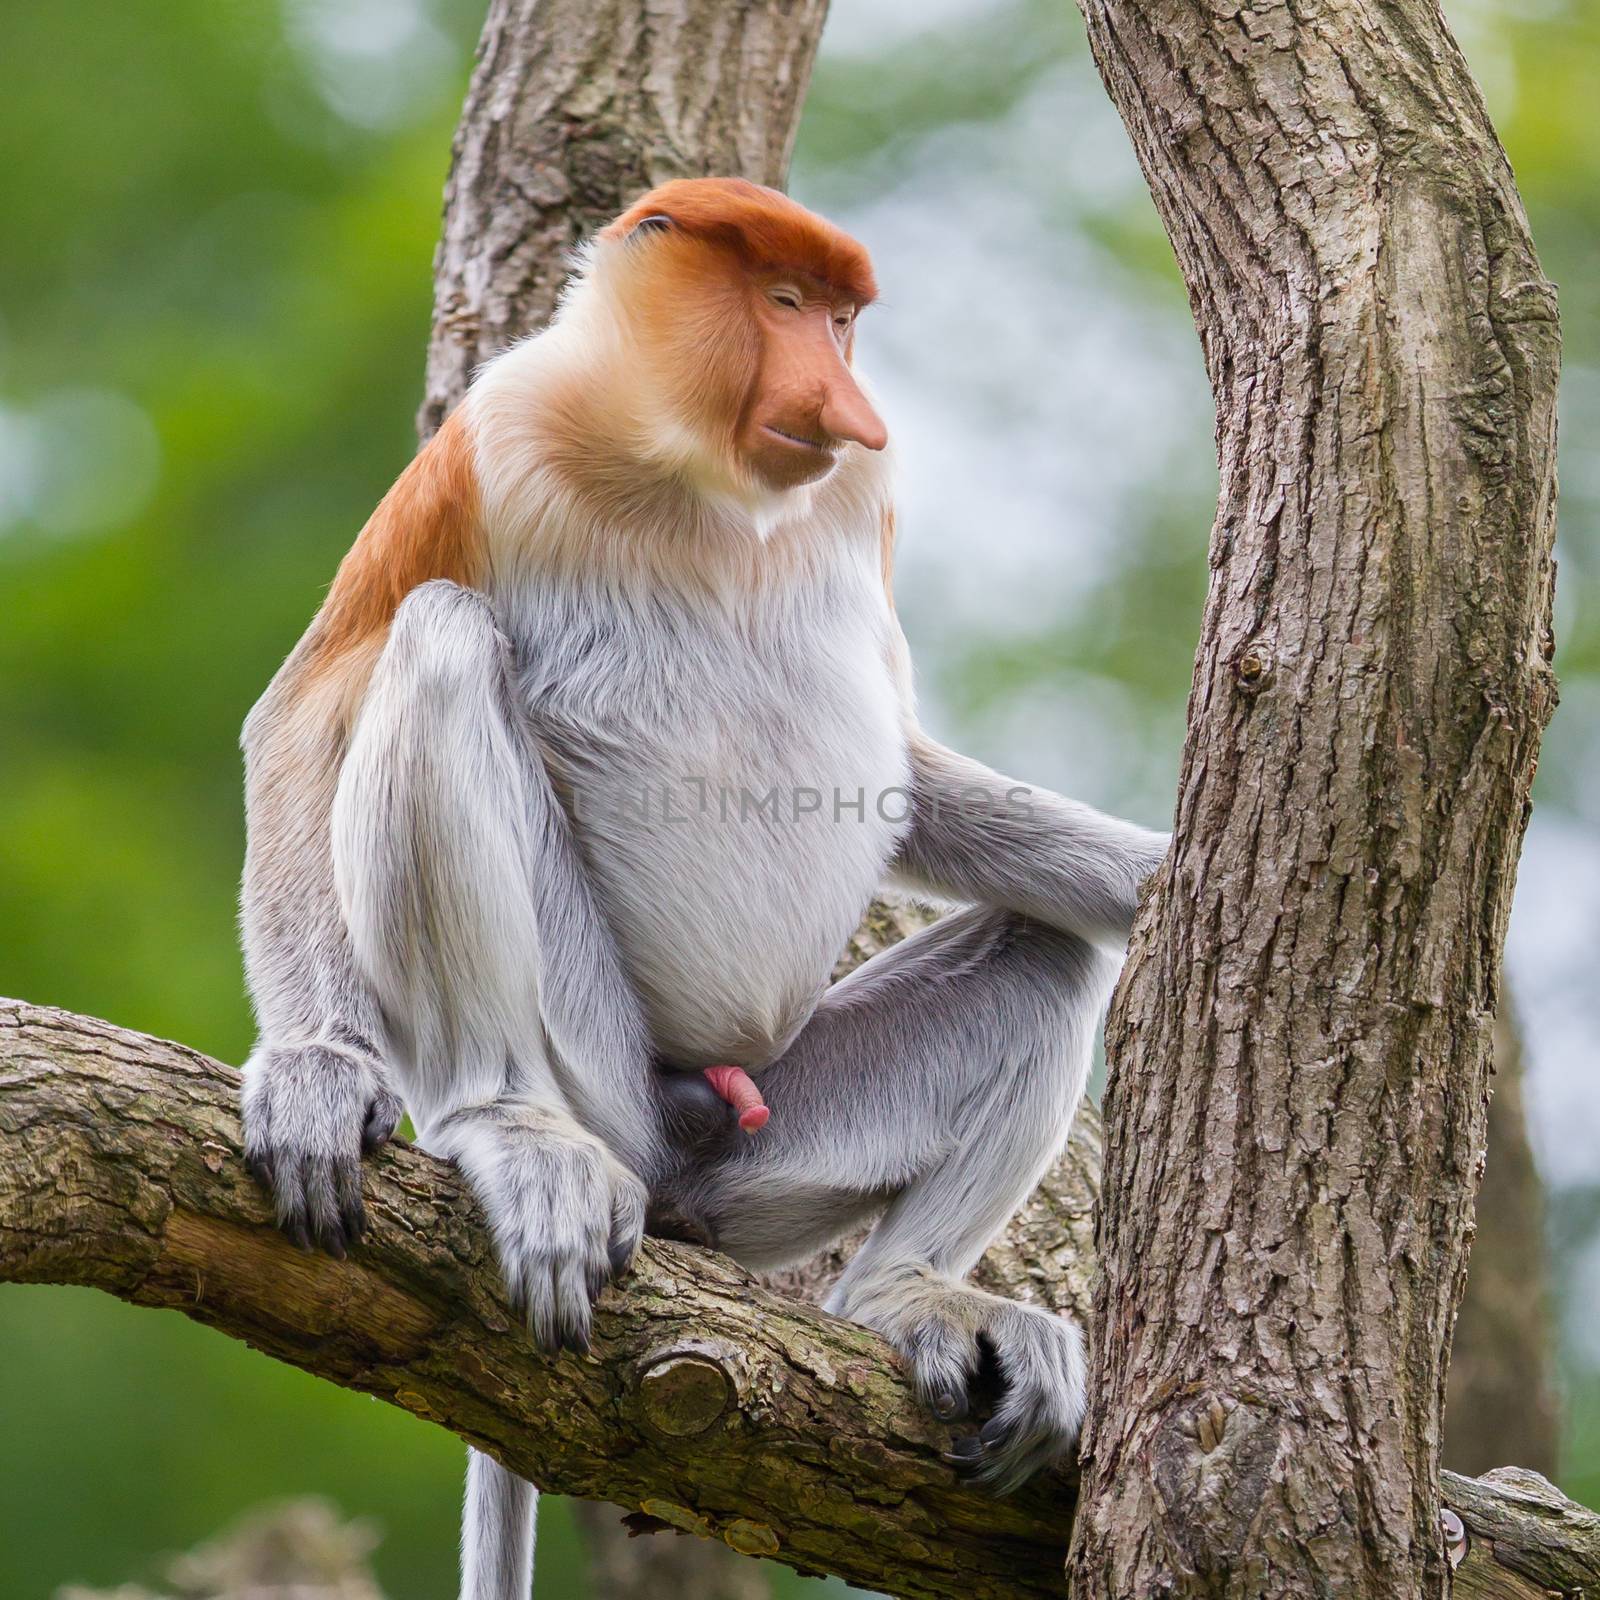 Proboscis monkey in a tree, it's natural habitat